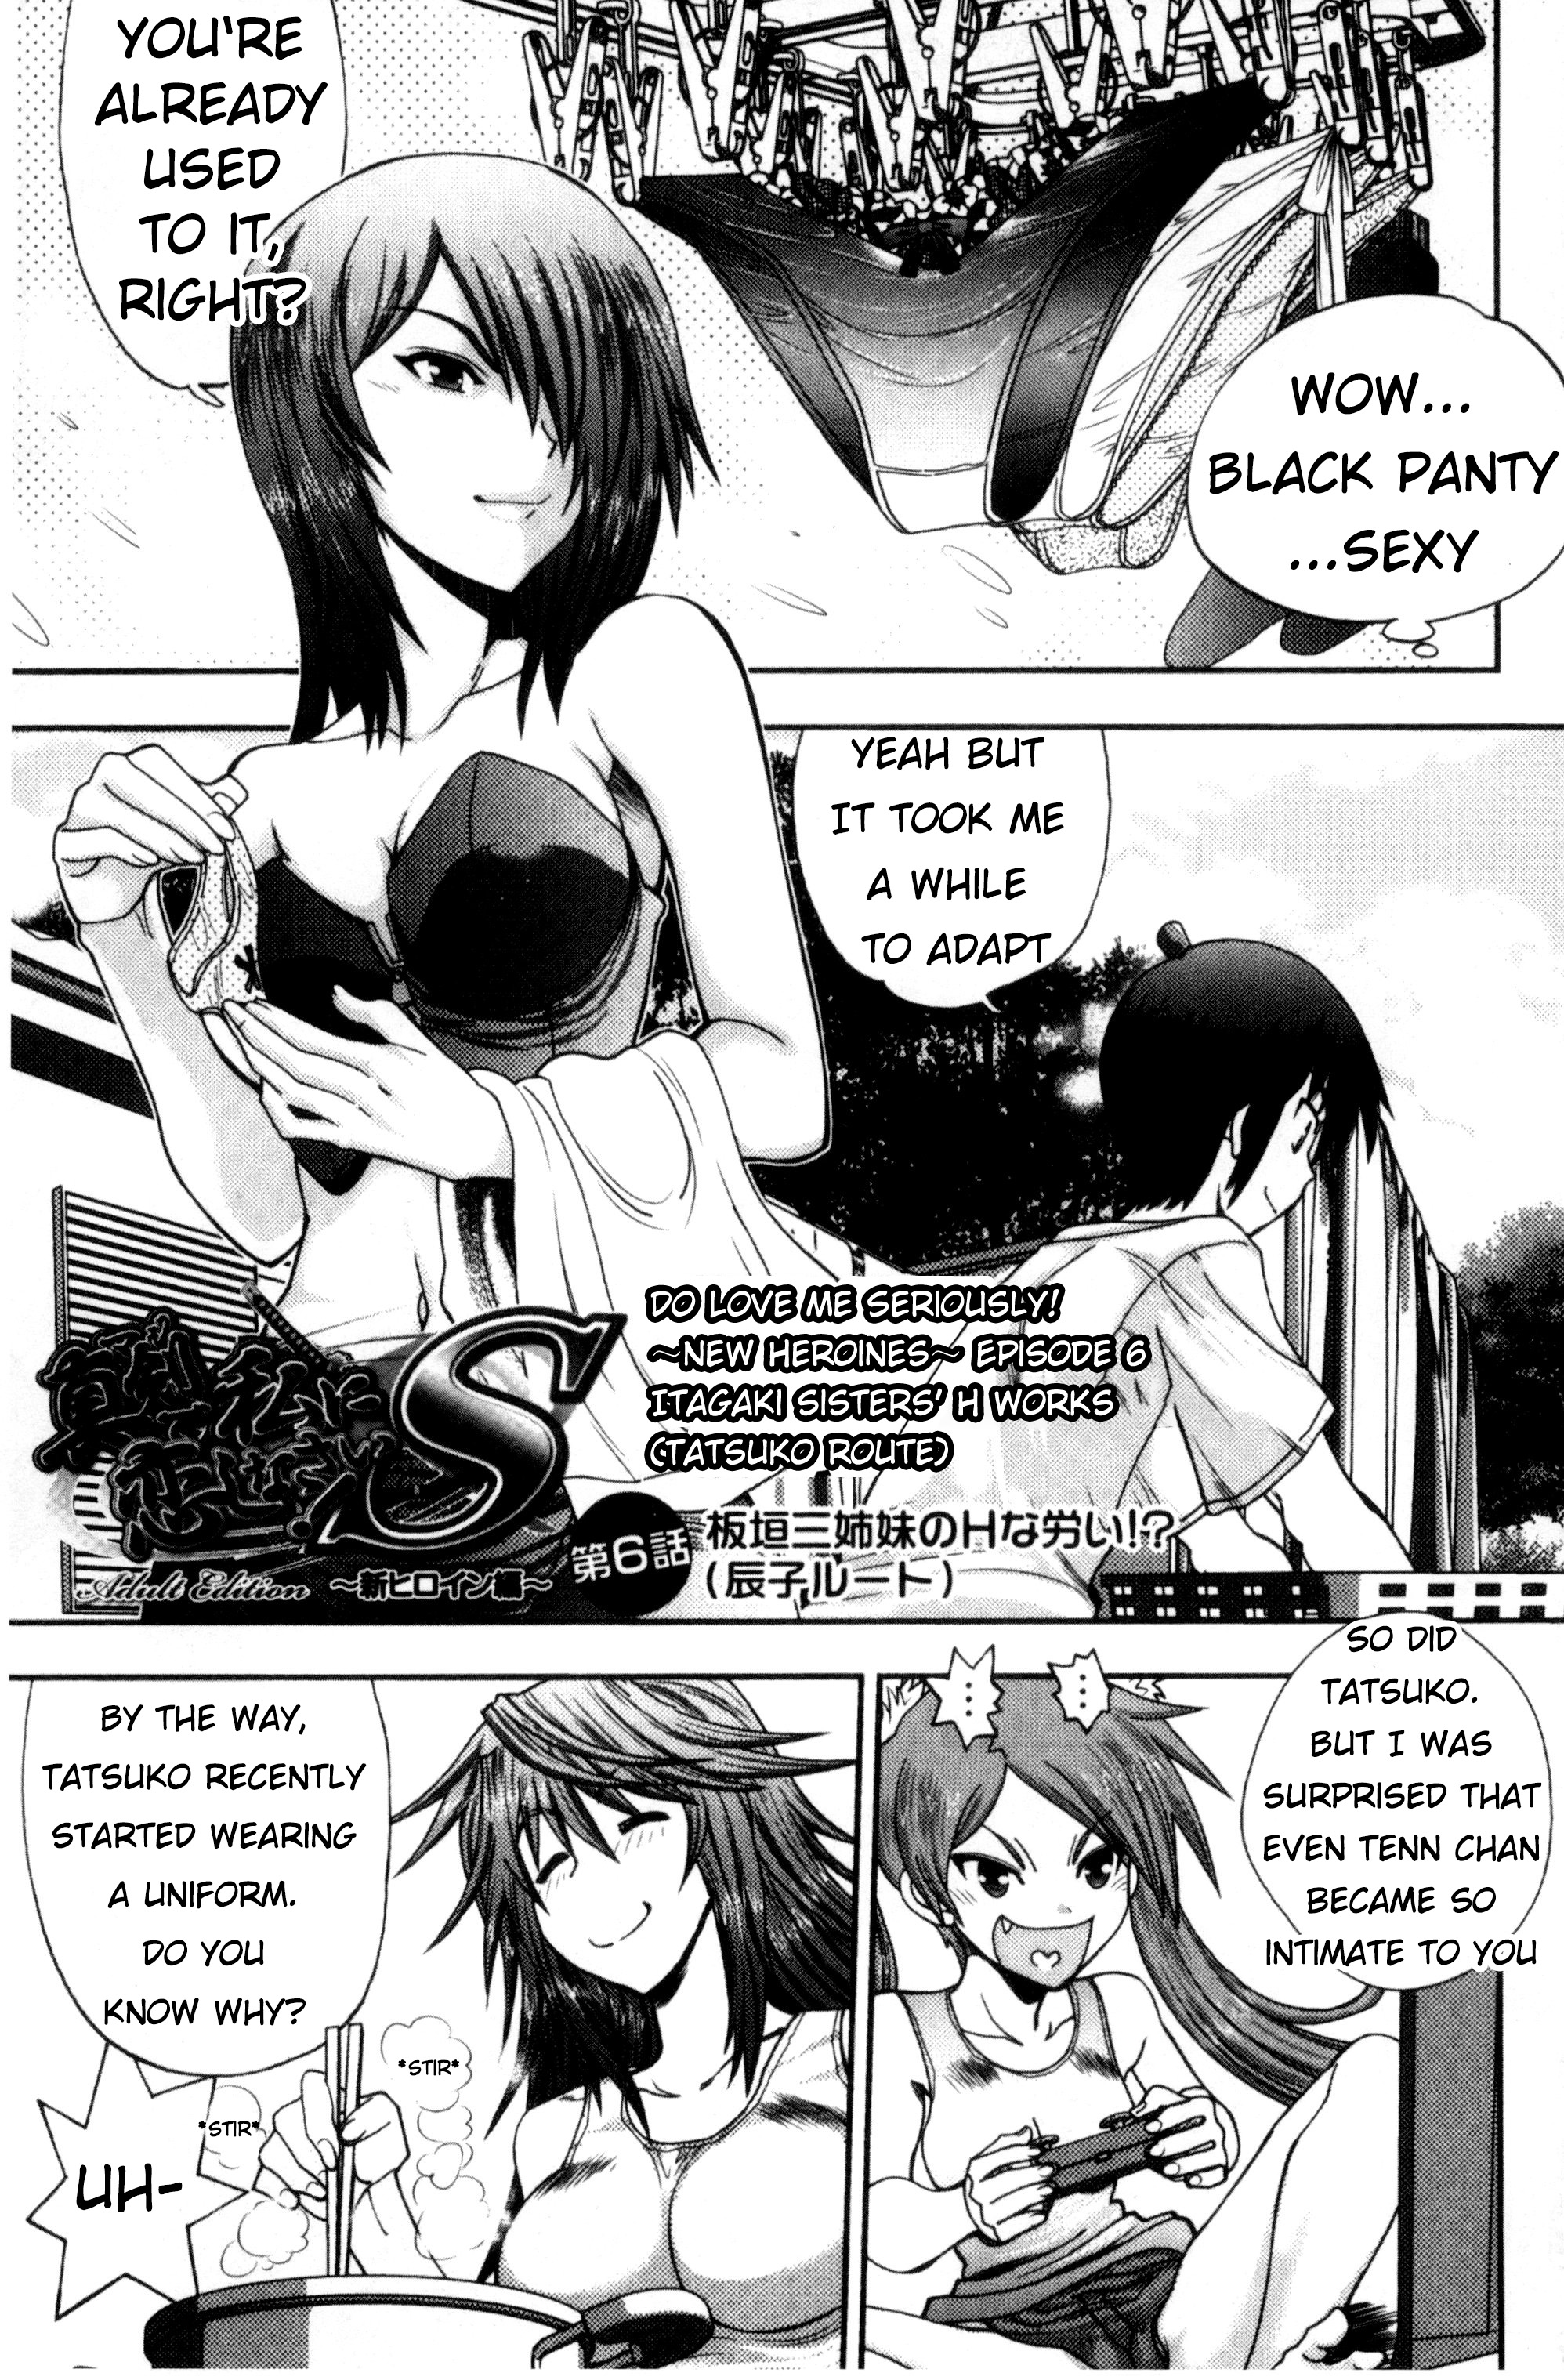 Yagami Dai Shin Heroine Hen~ Episode 6 Itagaki Sisters' H works Hentai Comic